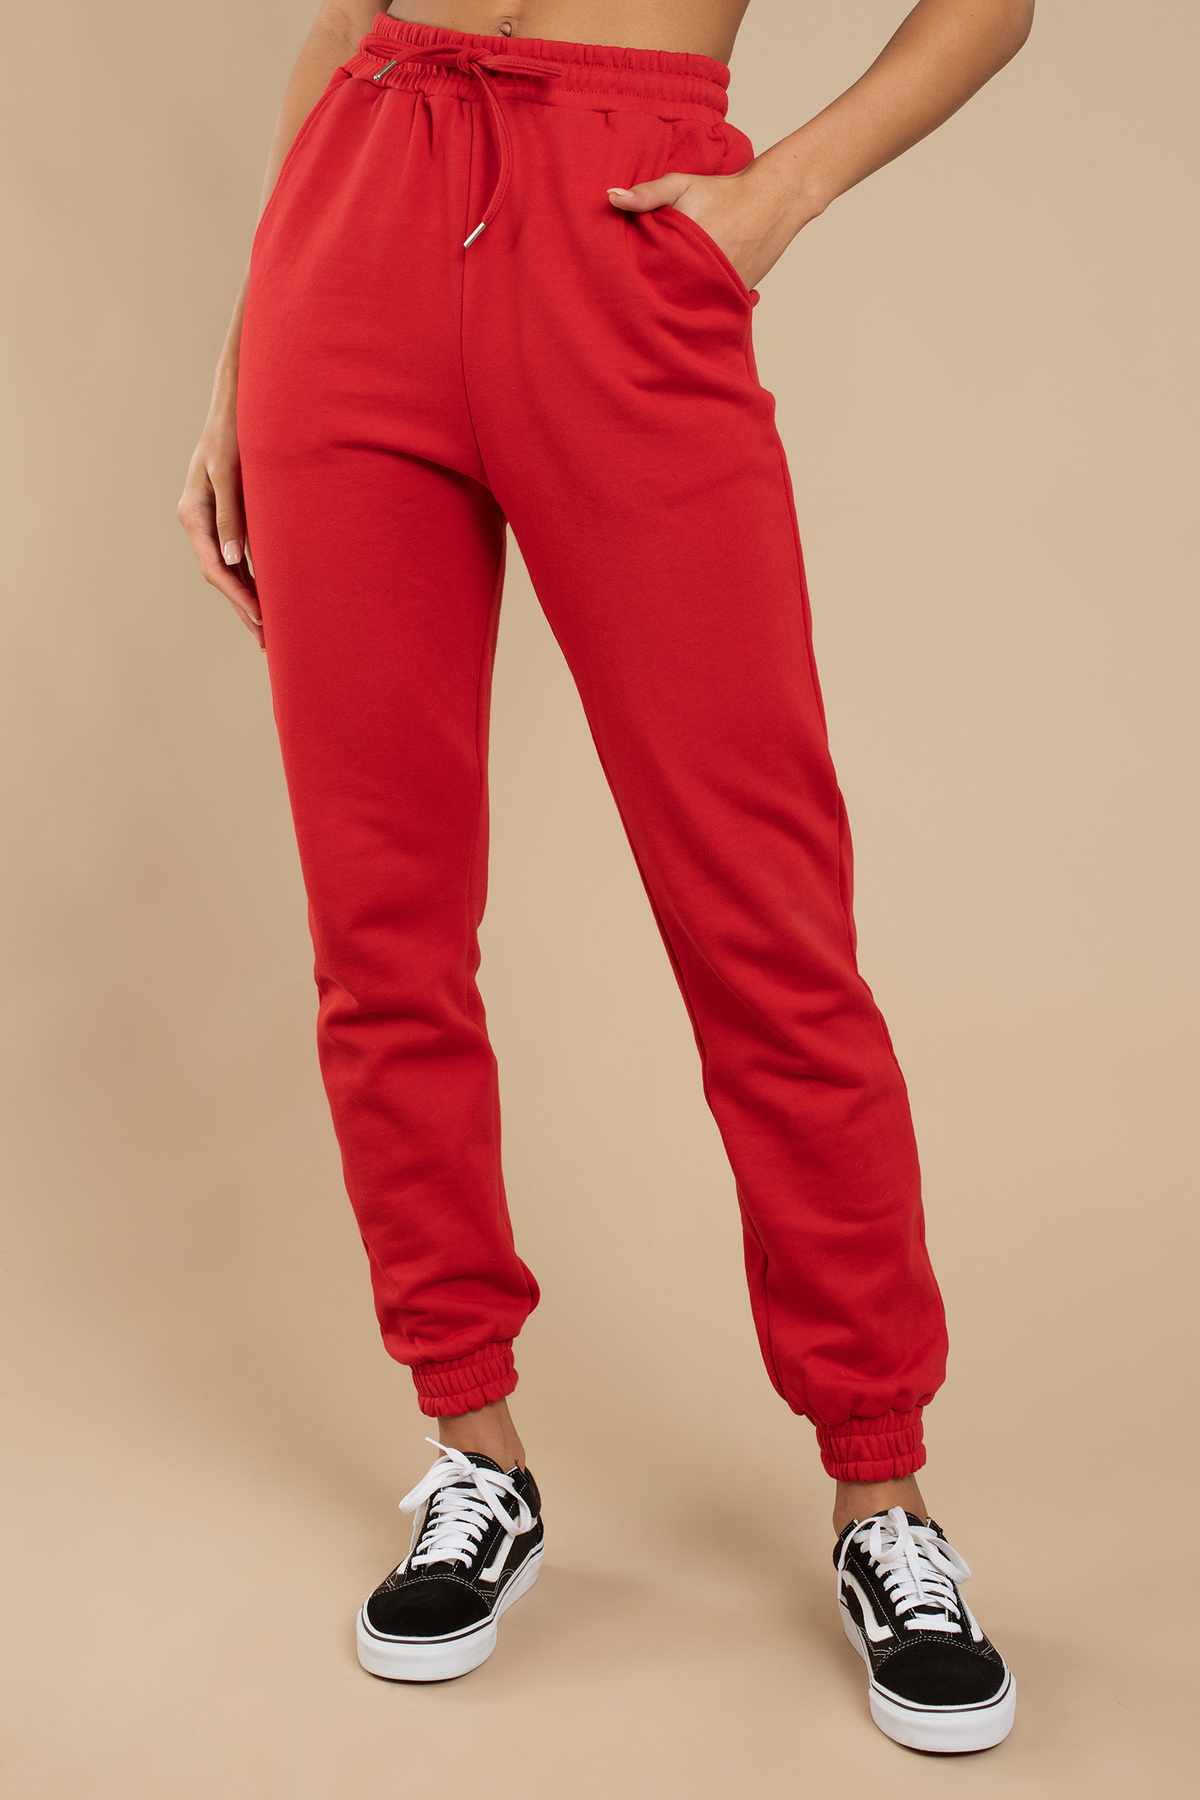 Naomi Jogger Pants in Red - $50 | Tobi US